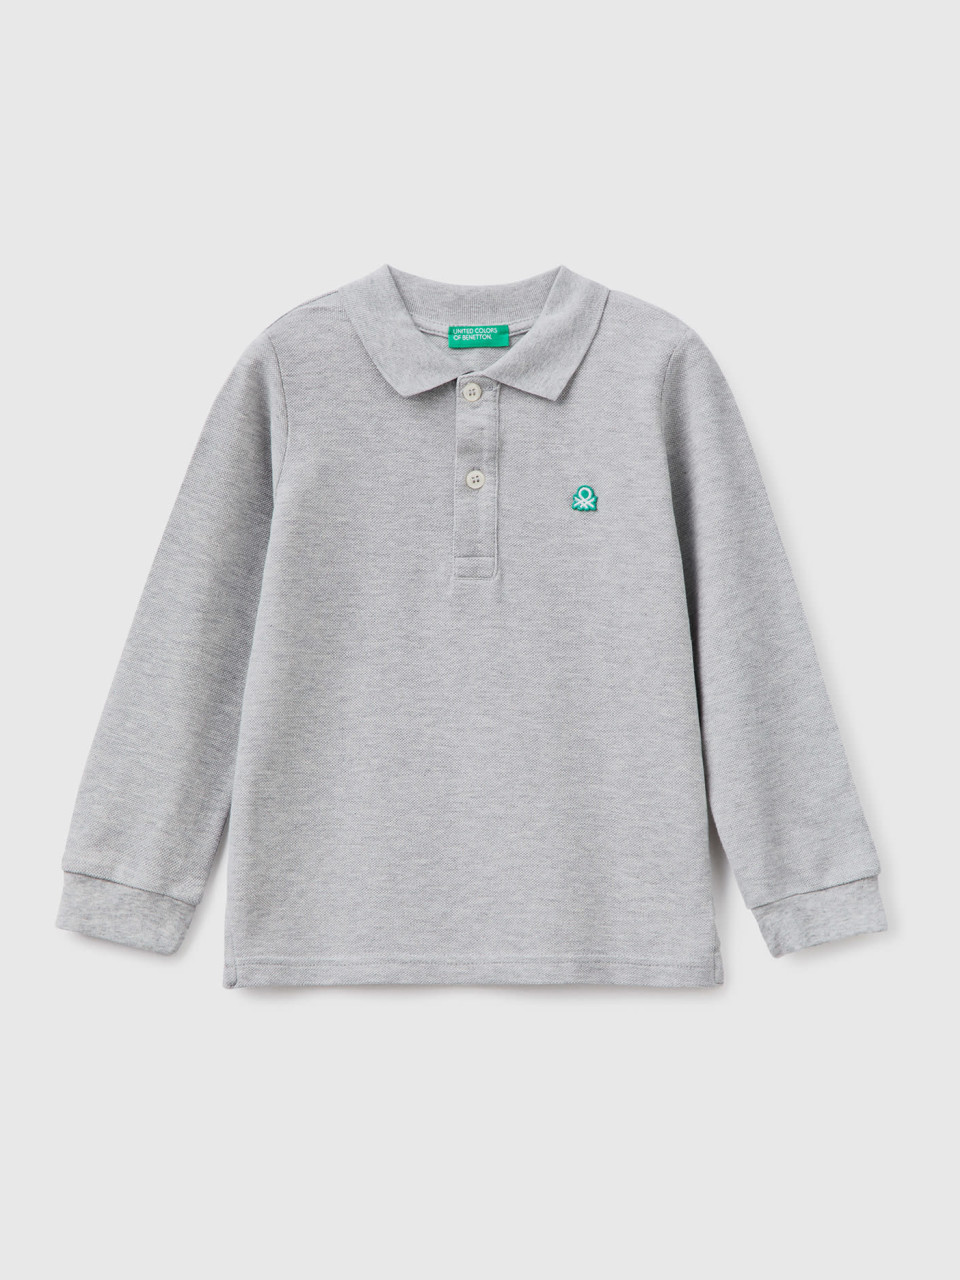 Benetton, Long Sleeve Polo In Organic Cotton, Light Gray, Kids